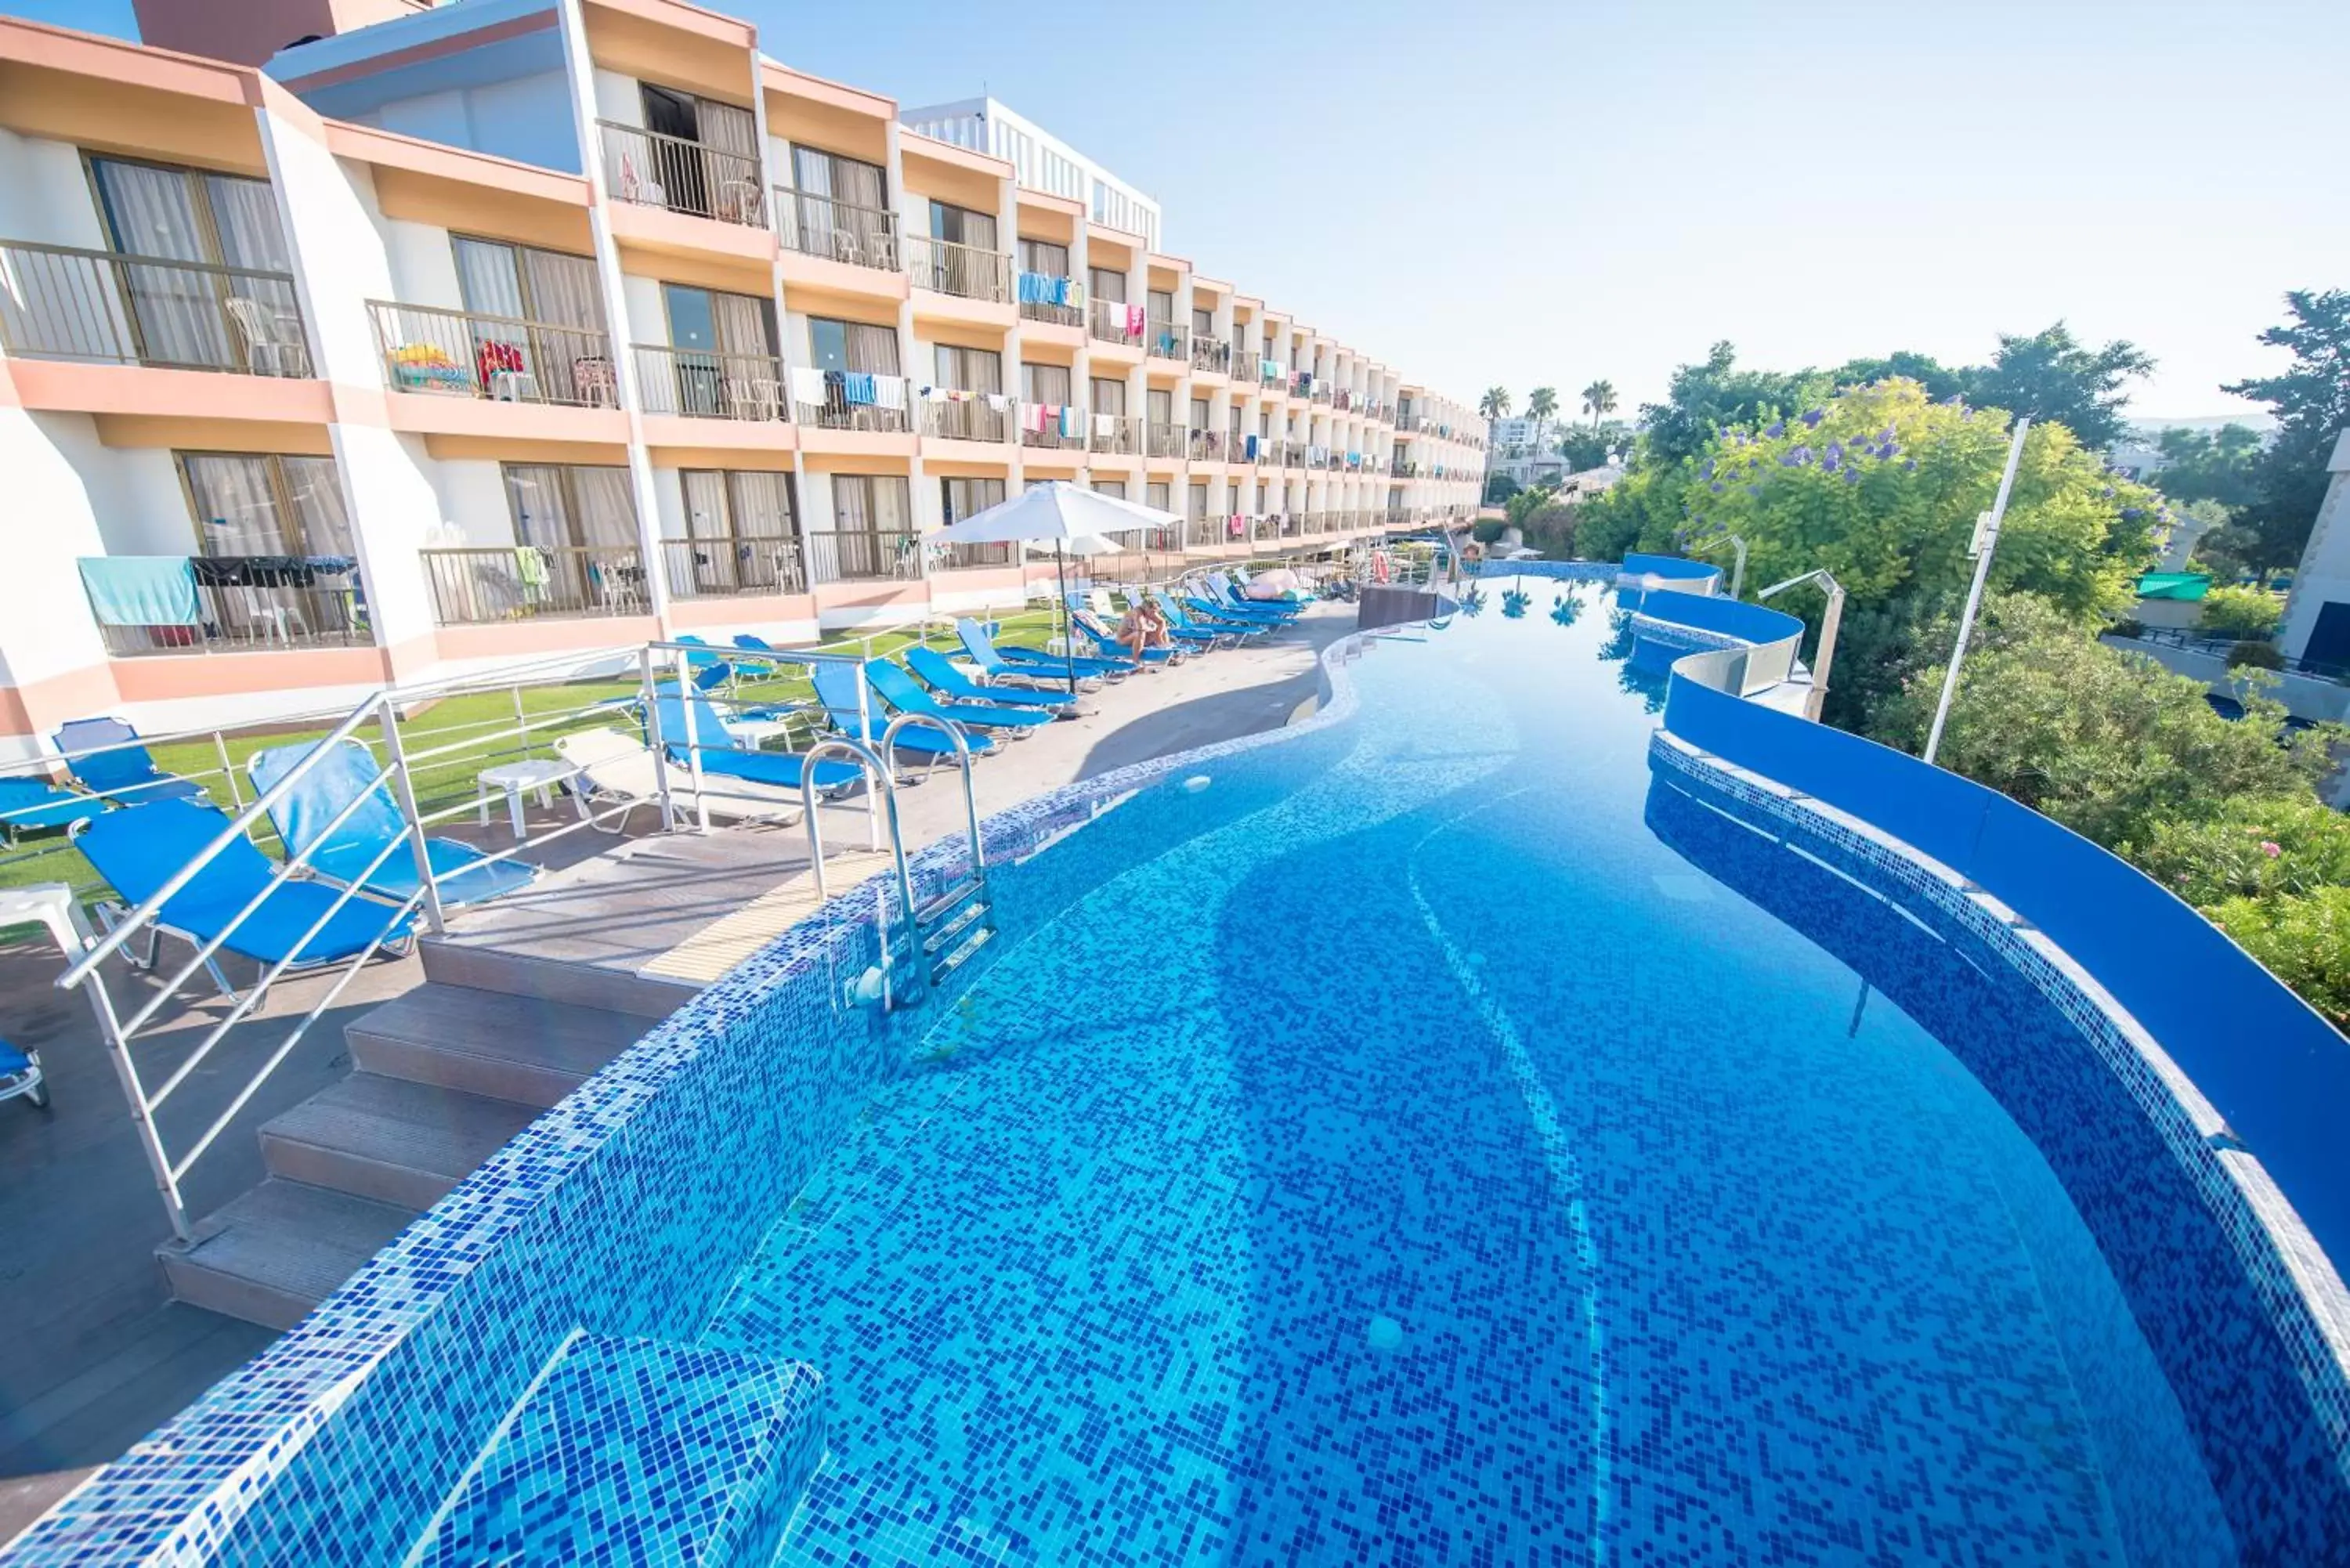 Swimming pool in Avlida Hotel